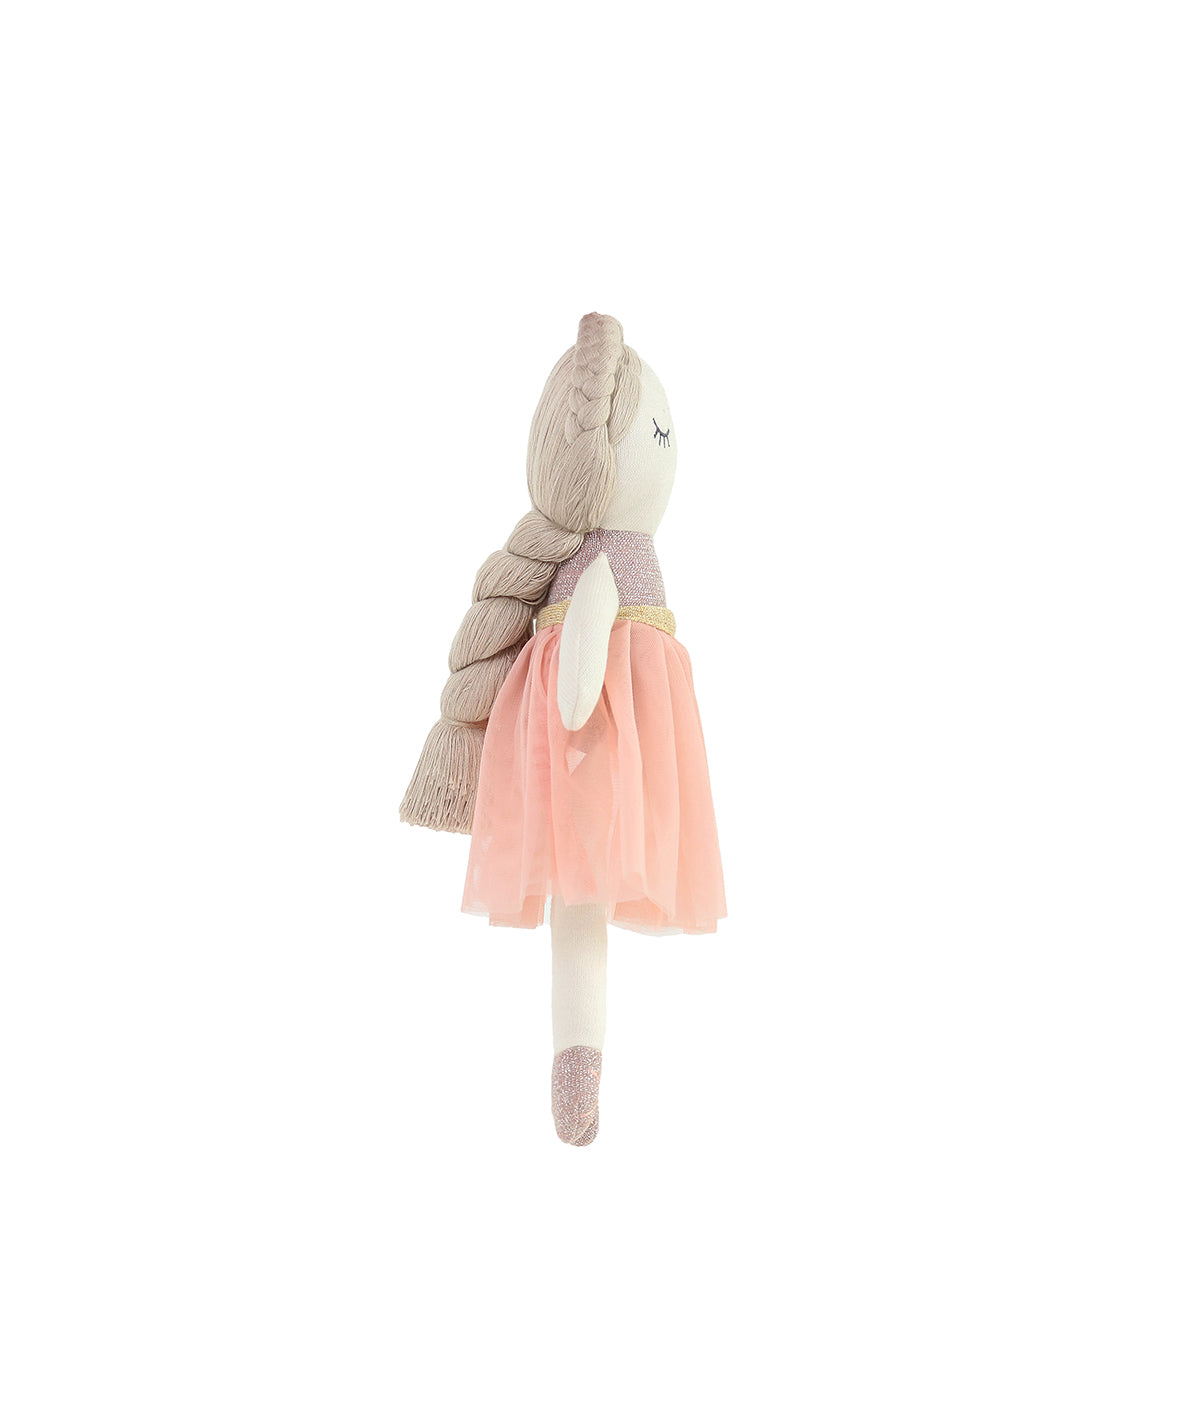 Ballerina Cotton Knitted Stuffed Soft Toy (Ivory, Pink & Lurex)